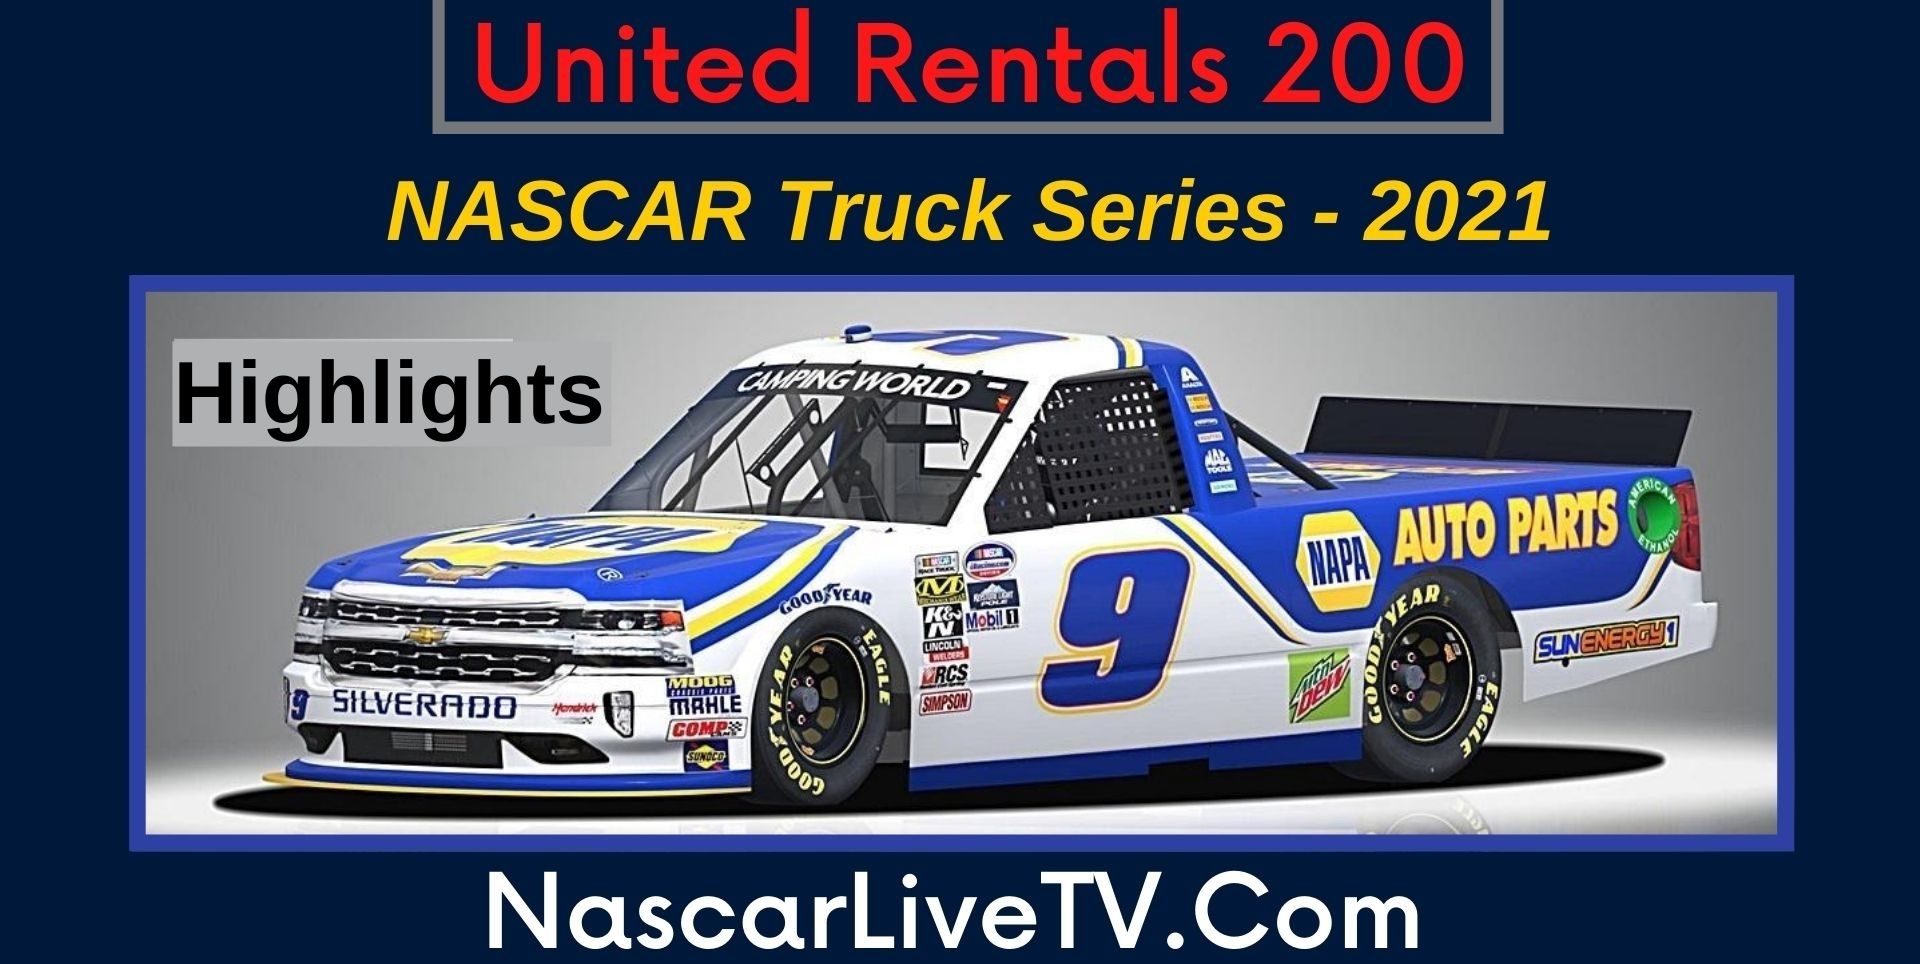 United Rentals 200 Highlights NASCAR Truck Series 2021